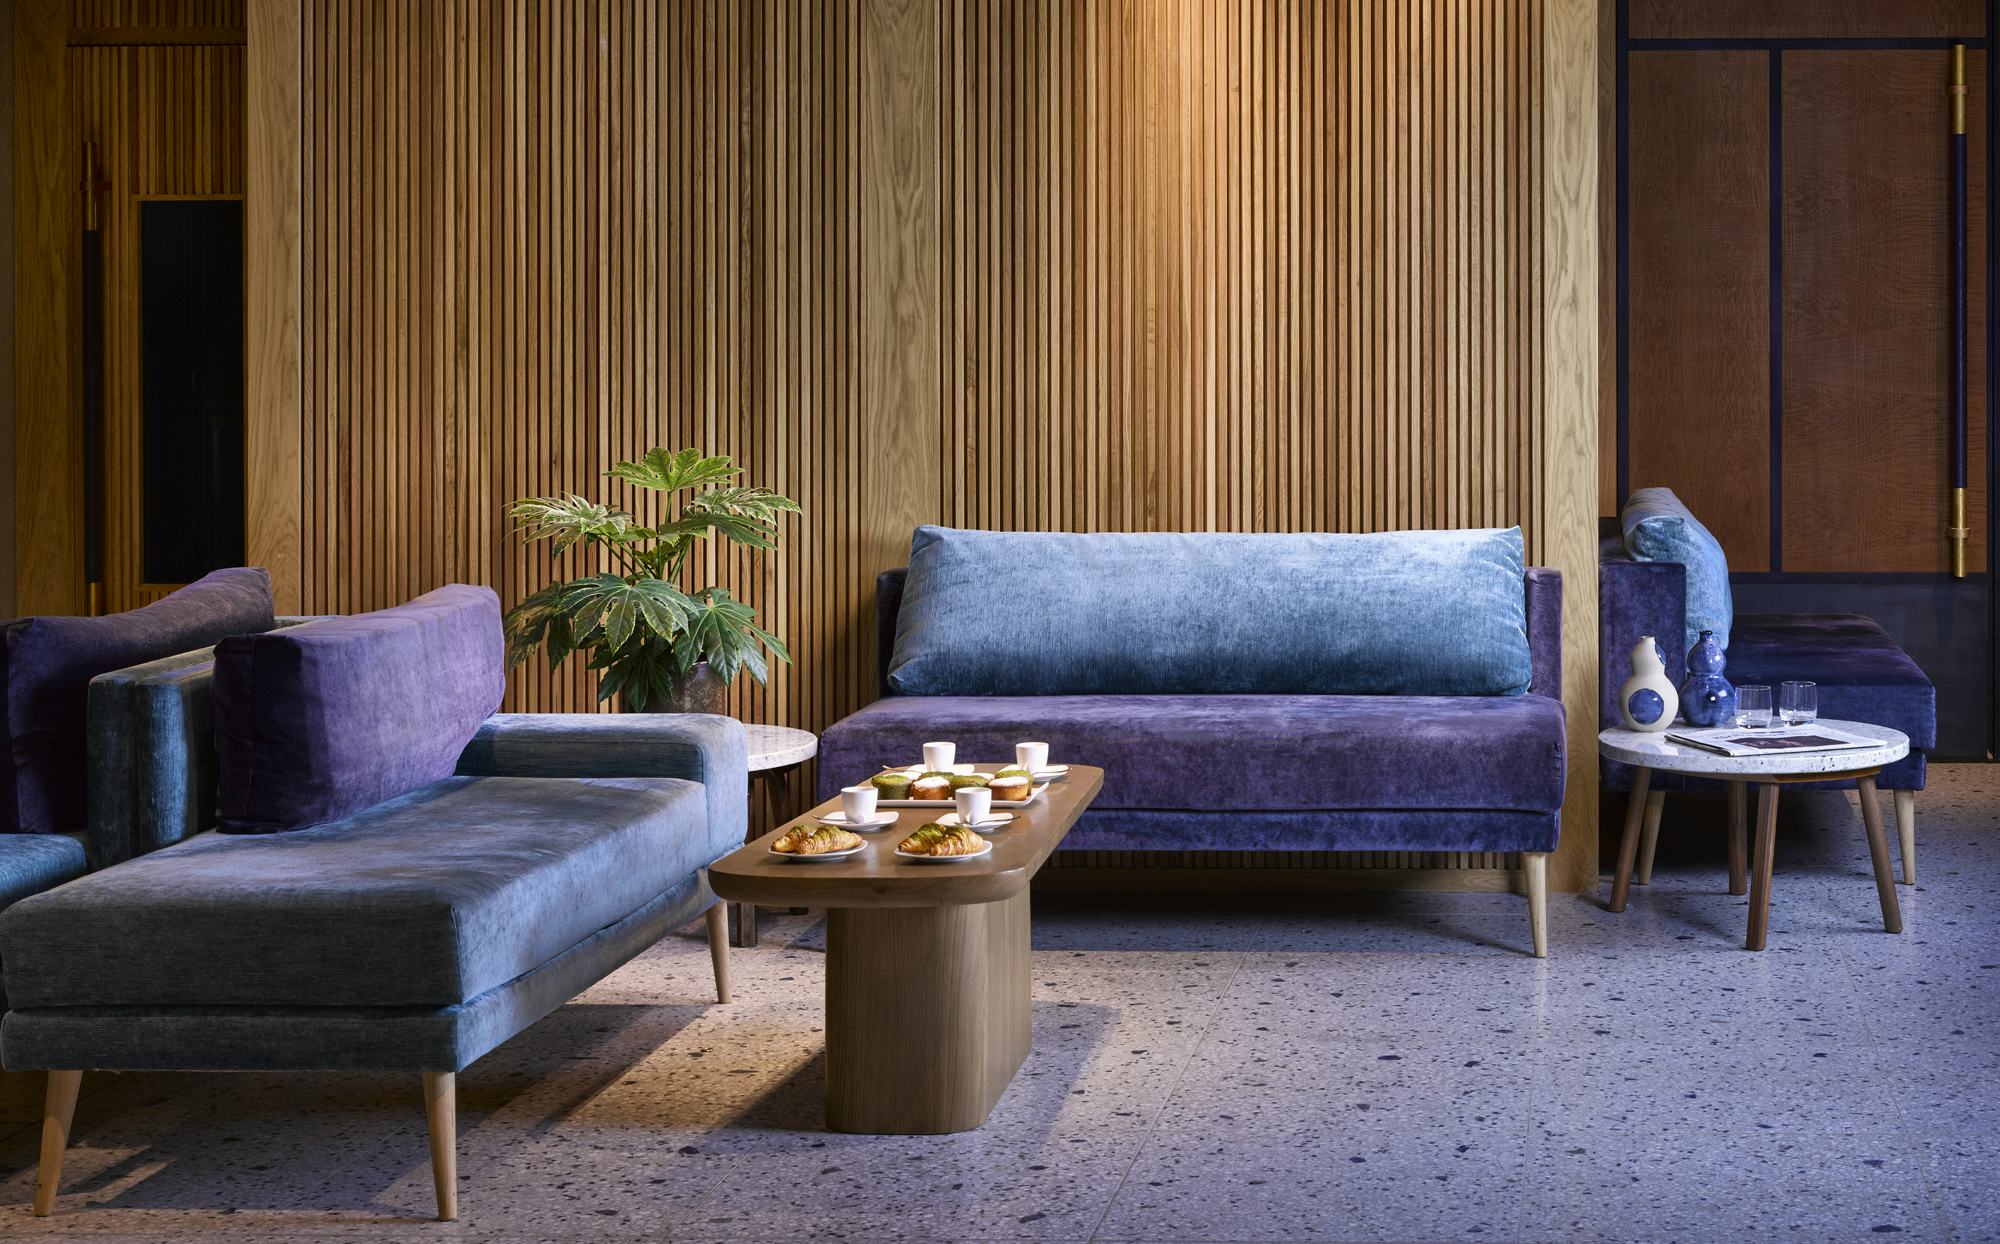 Nobu Shoreditch london hotels venue hire private events arty and designer interiors purple lounge